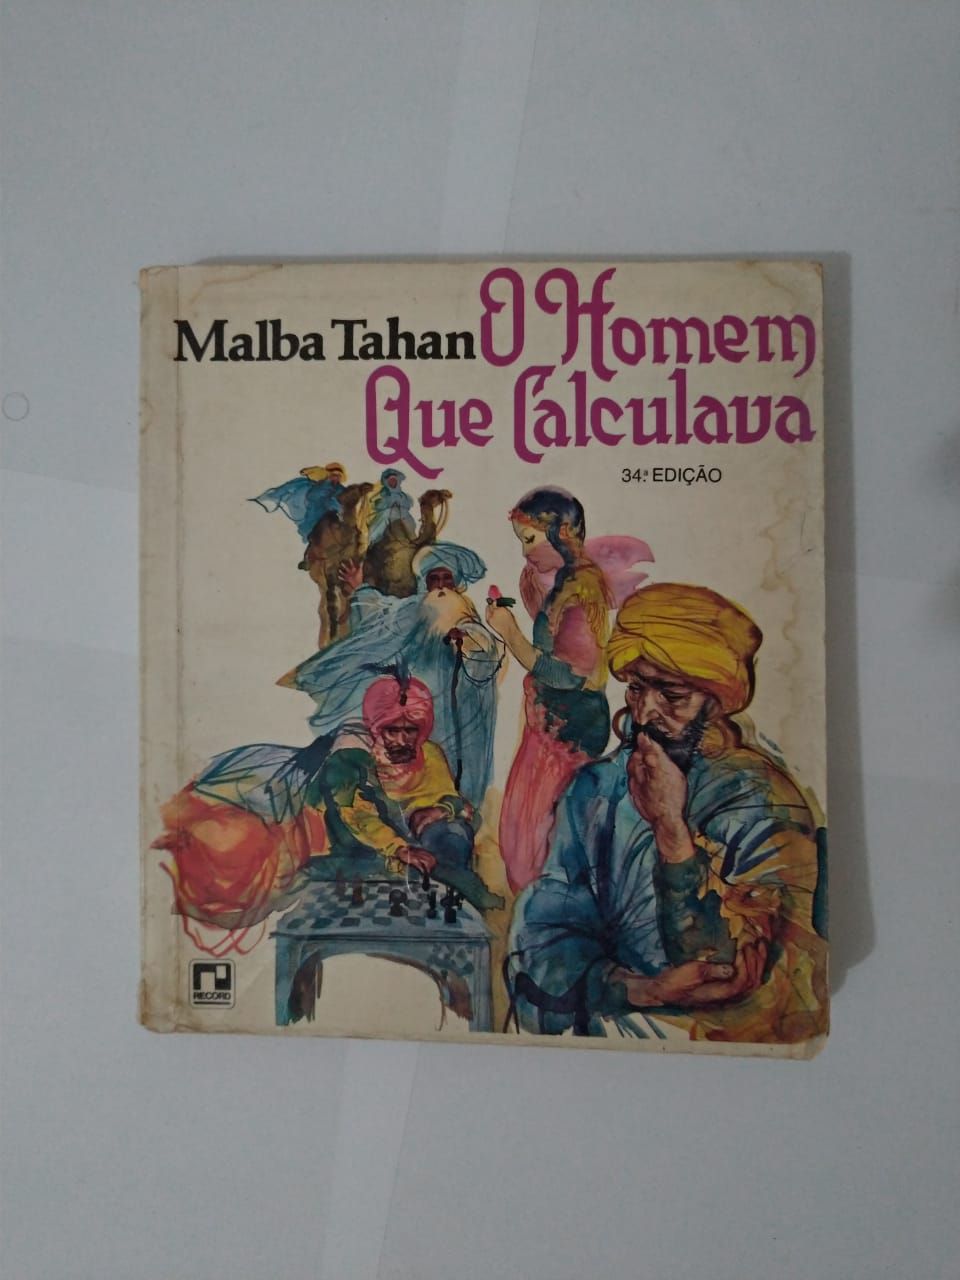 Malba Tahan - O homem que calculava